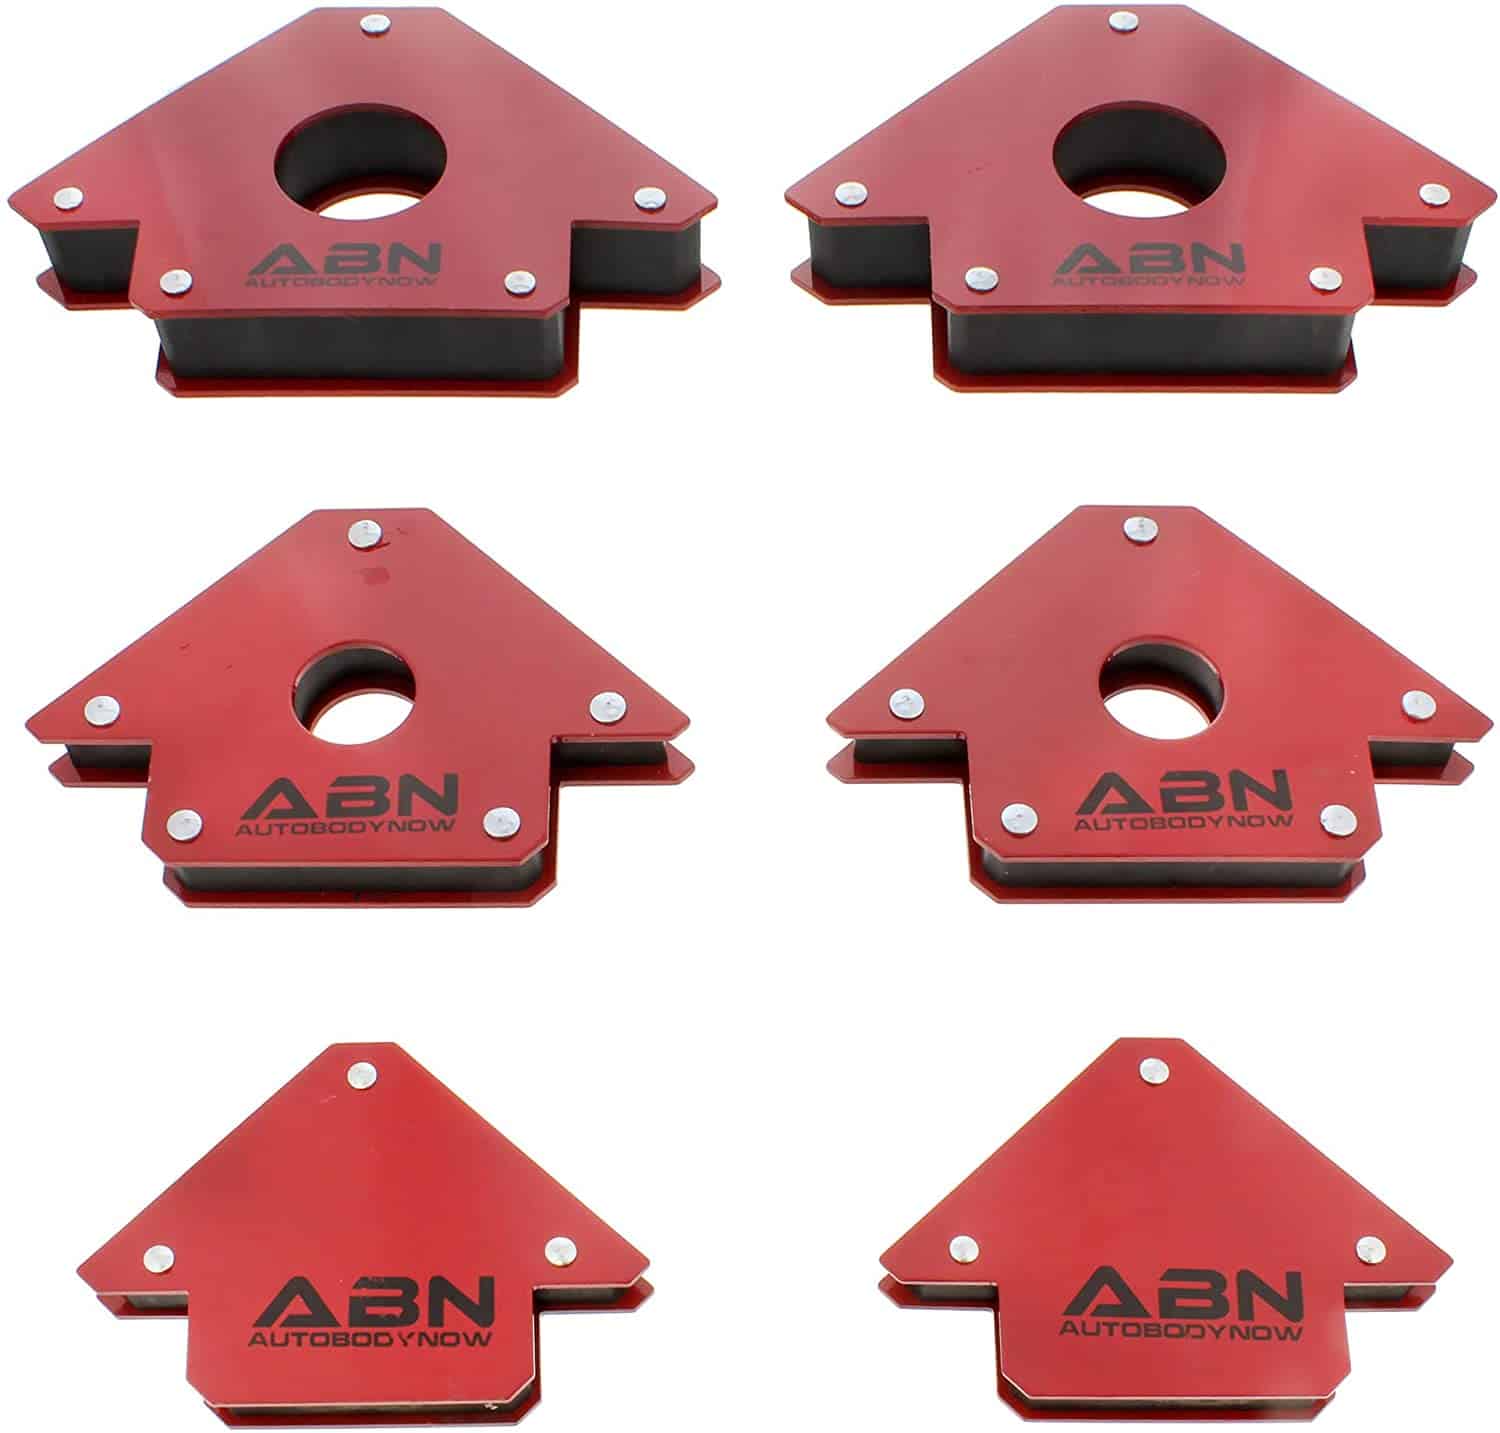 Best arrow-shaped welding magnet- ABN Arrow Welding Magnet set